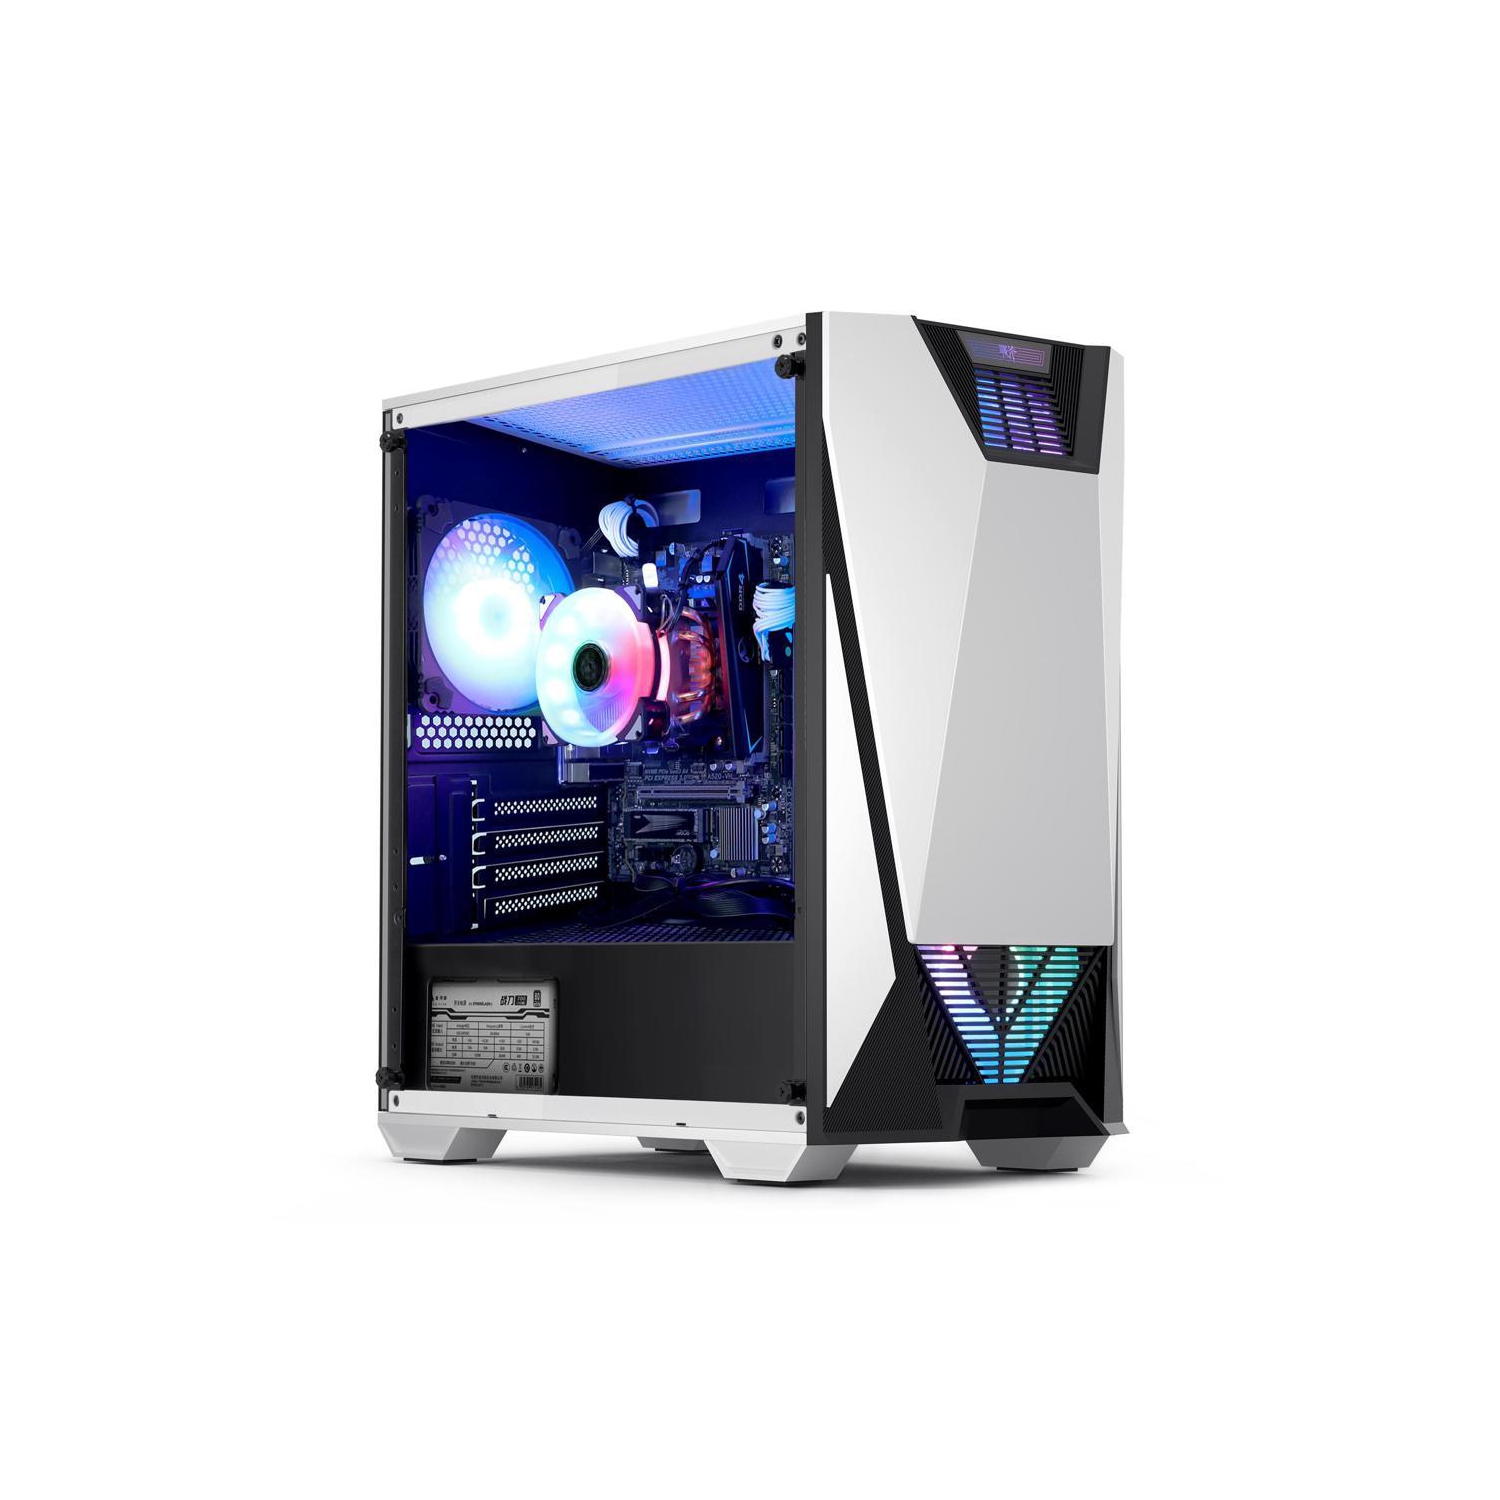 Hoengager Poseidon Gaming Desktop - Intel Core i5-12600K 10-Core 3.7GHz- 16GB DDR4 3200MHz - 500GB M.2 NVMe SSD + 2TB HDD- WIFI -RGB Fans - Windows 11 Pro Desktop Computer-White